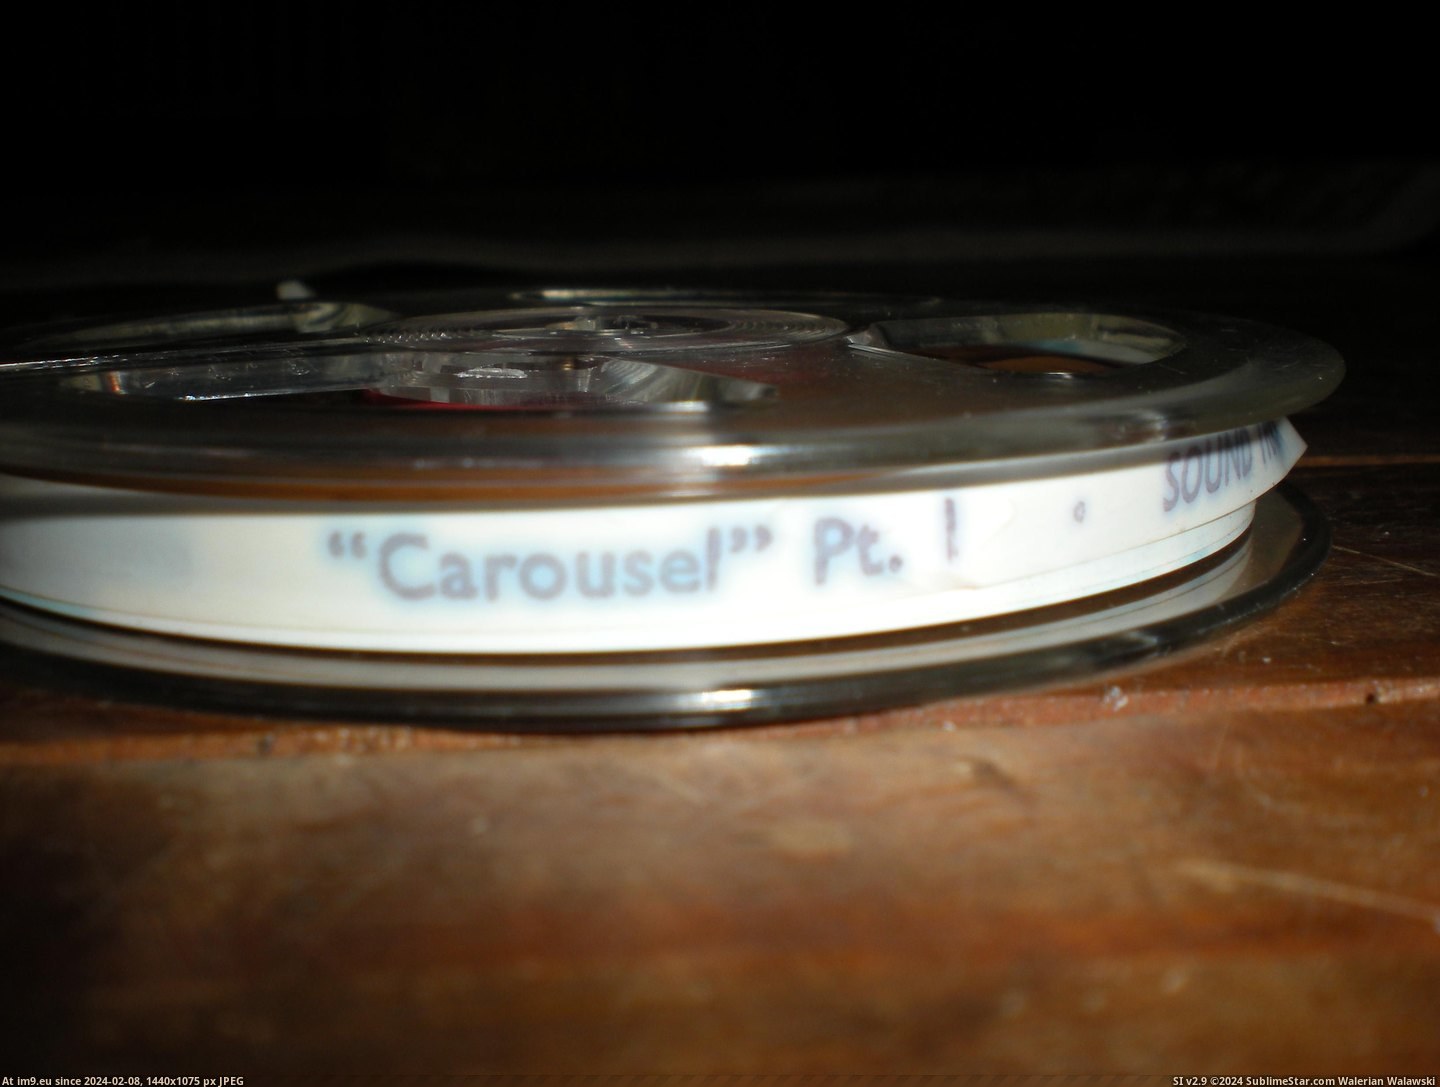  #Carousel  Carousel 4 Pic. (Image of album new 1))